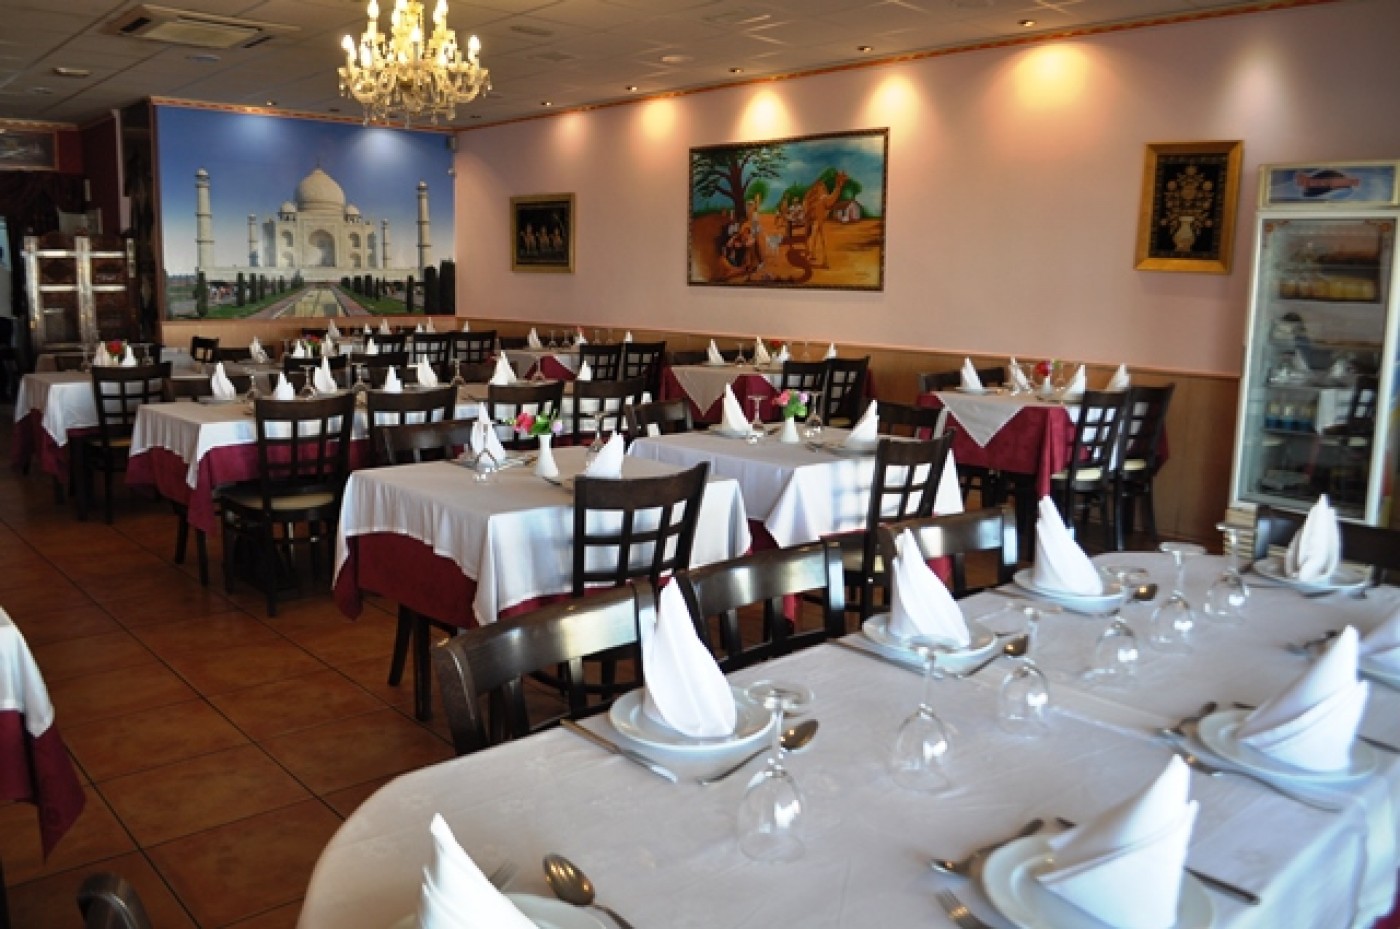 Quality Indian Restaurant Camposol